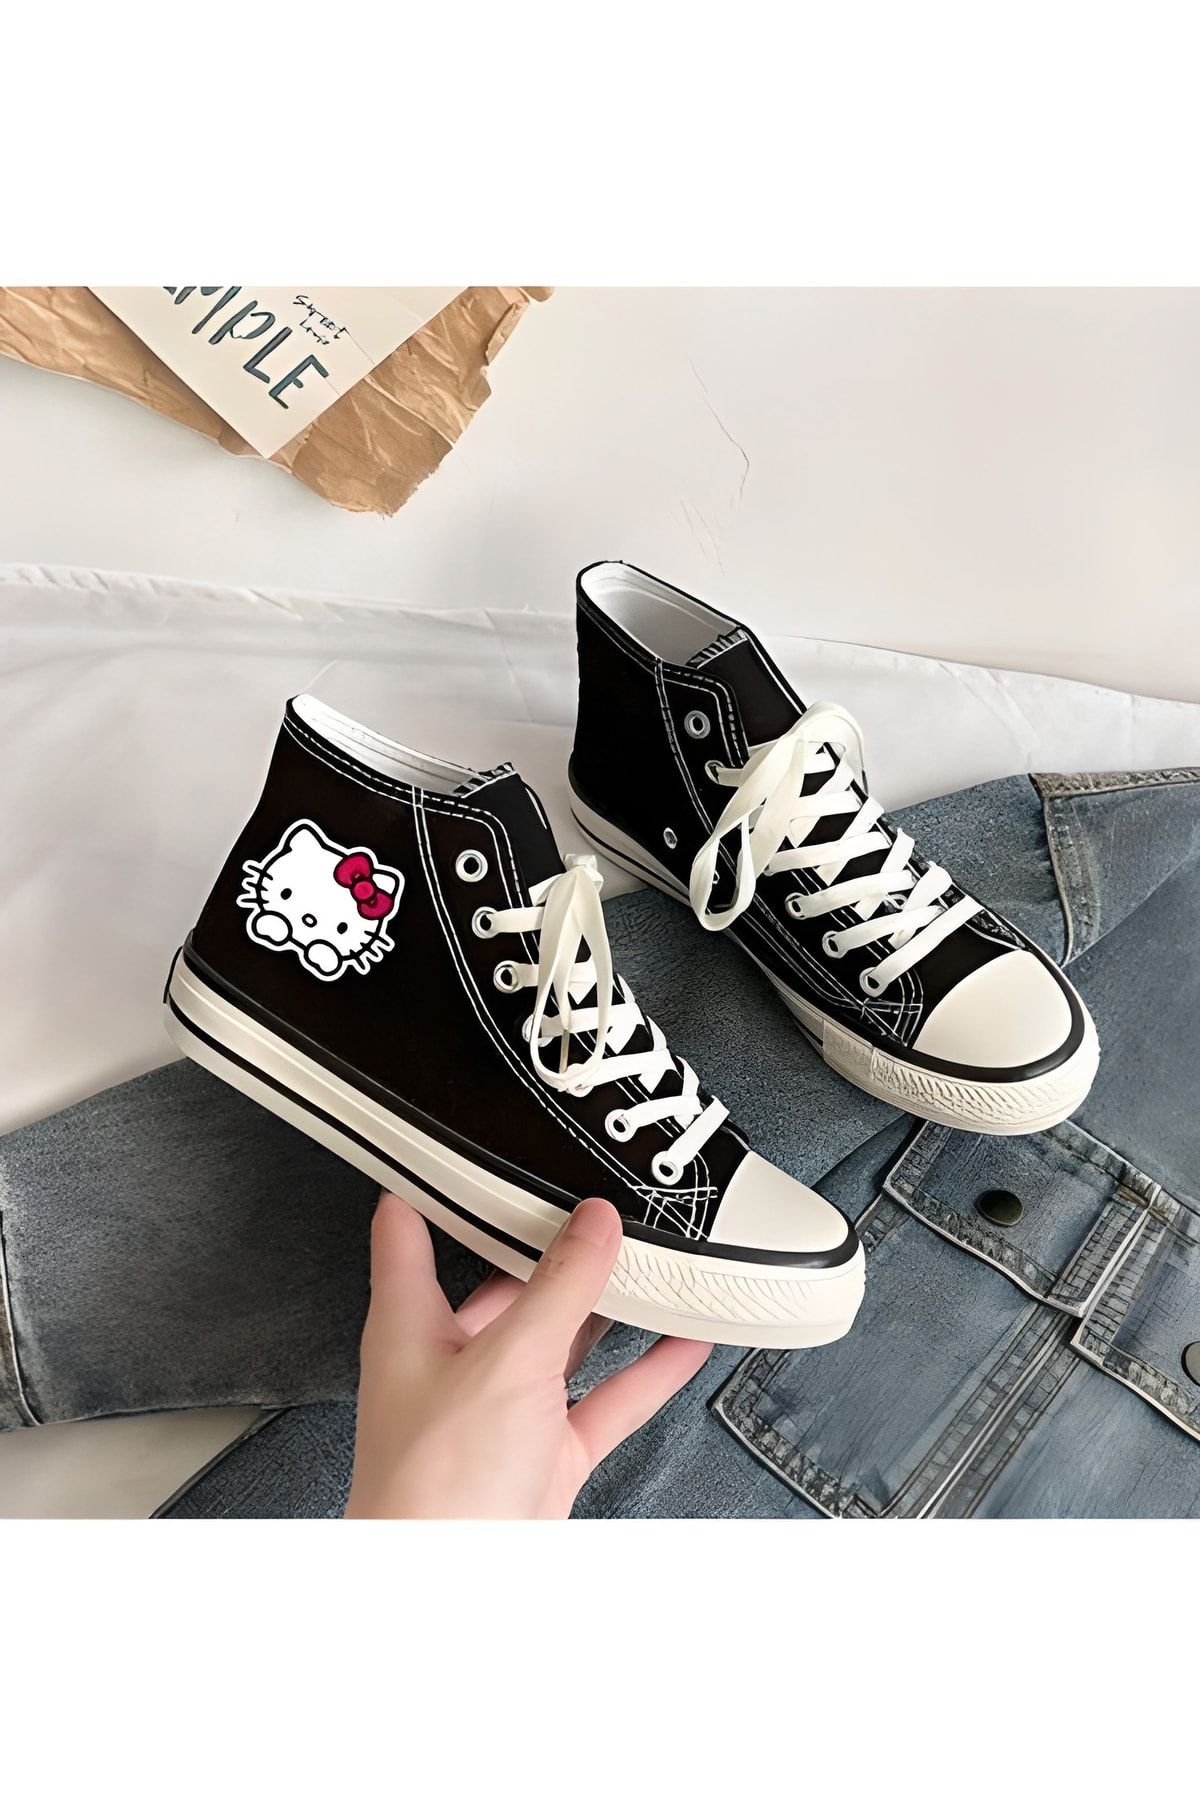 BROOD's Hello Kitty Baskılı Siyah Canvas  Ayakkabı